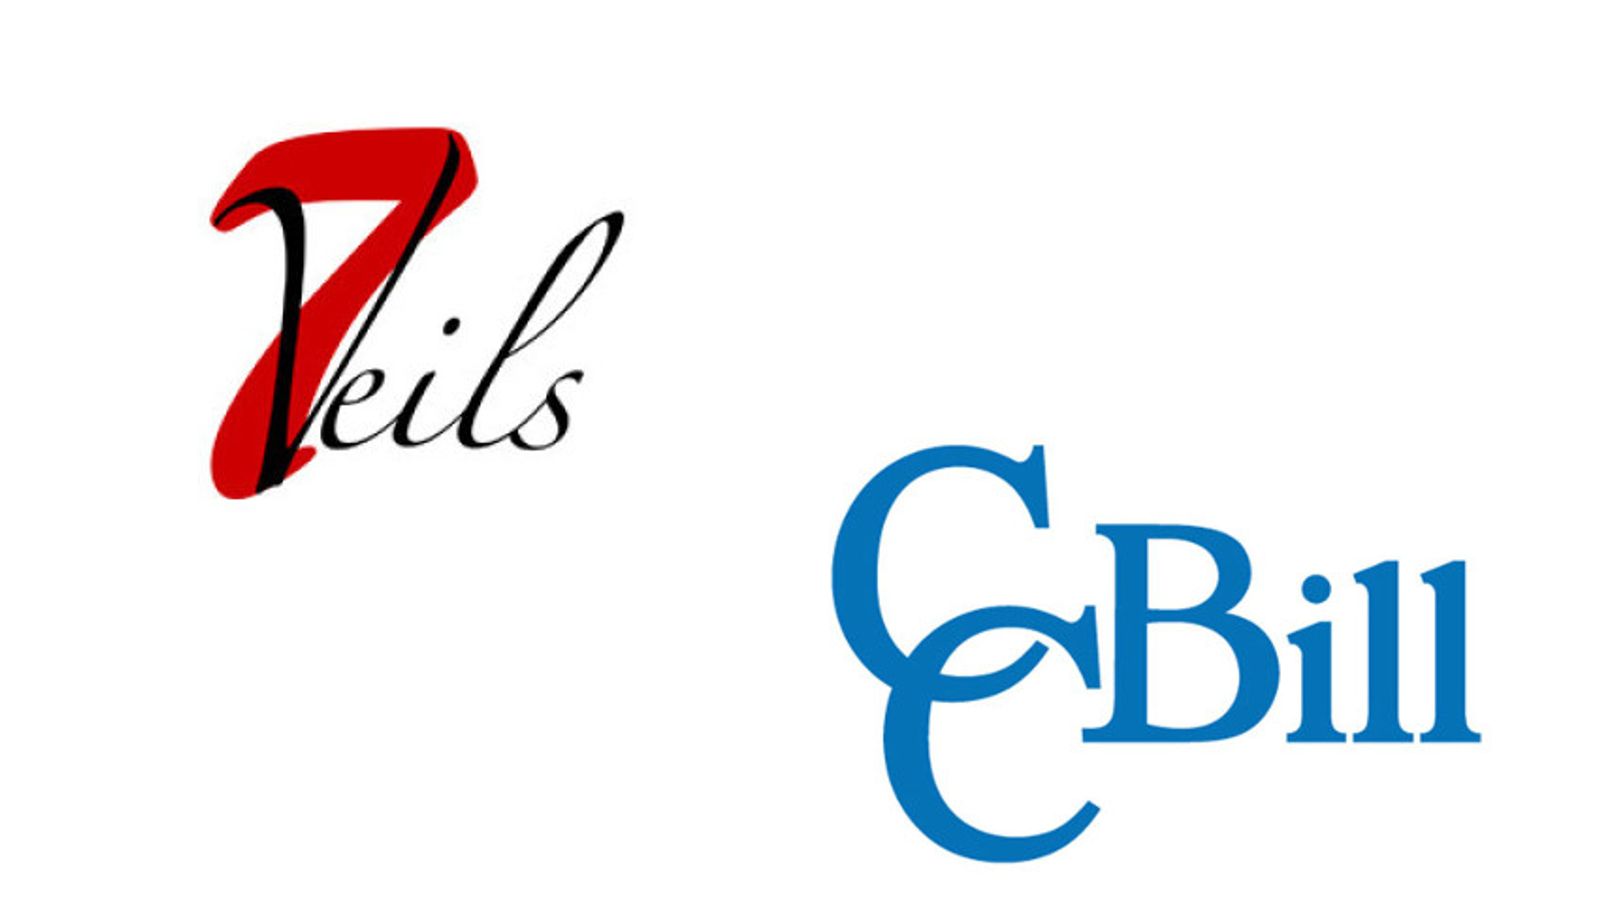 7Veils Becomes CCBill, Phoenix Forum Social Media Partner